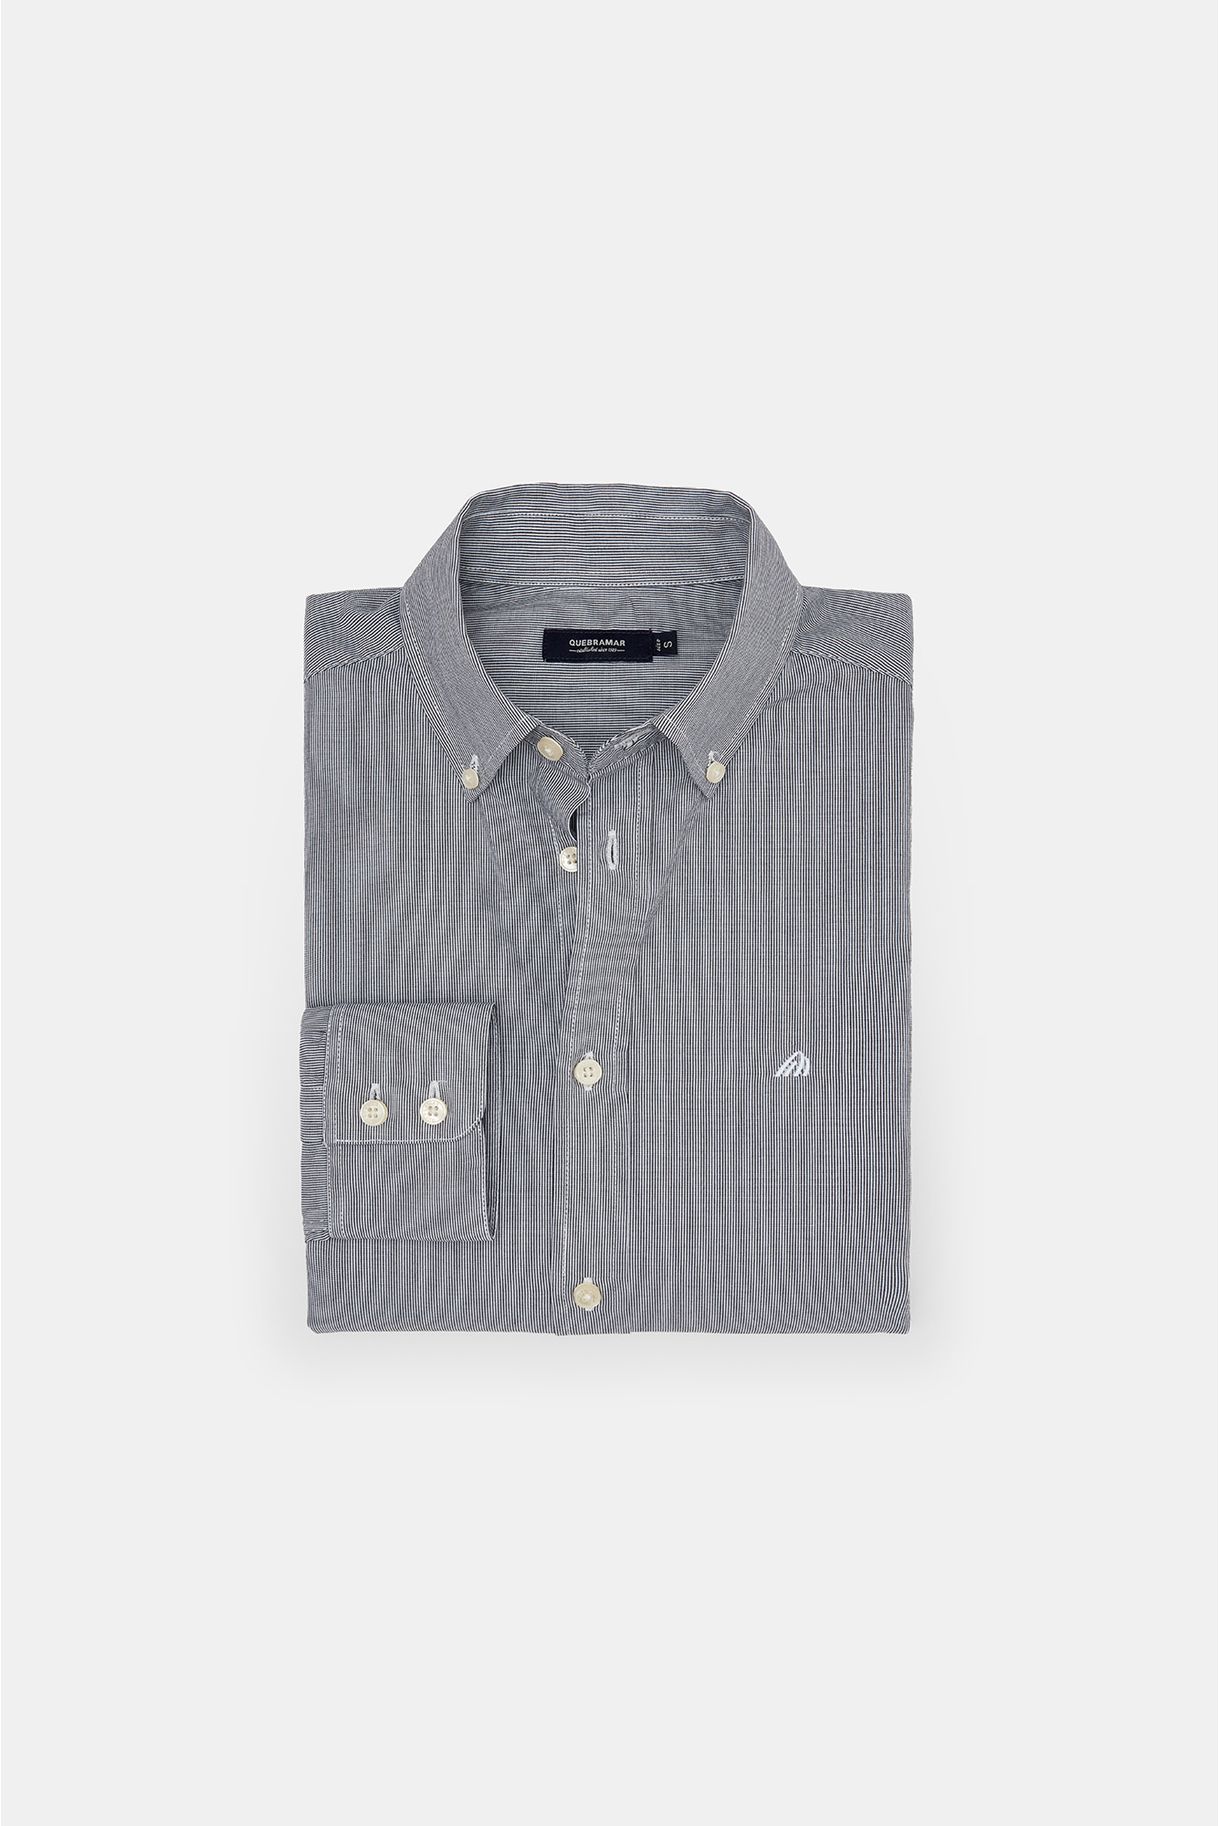 100% cotton micro striped shirt